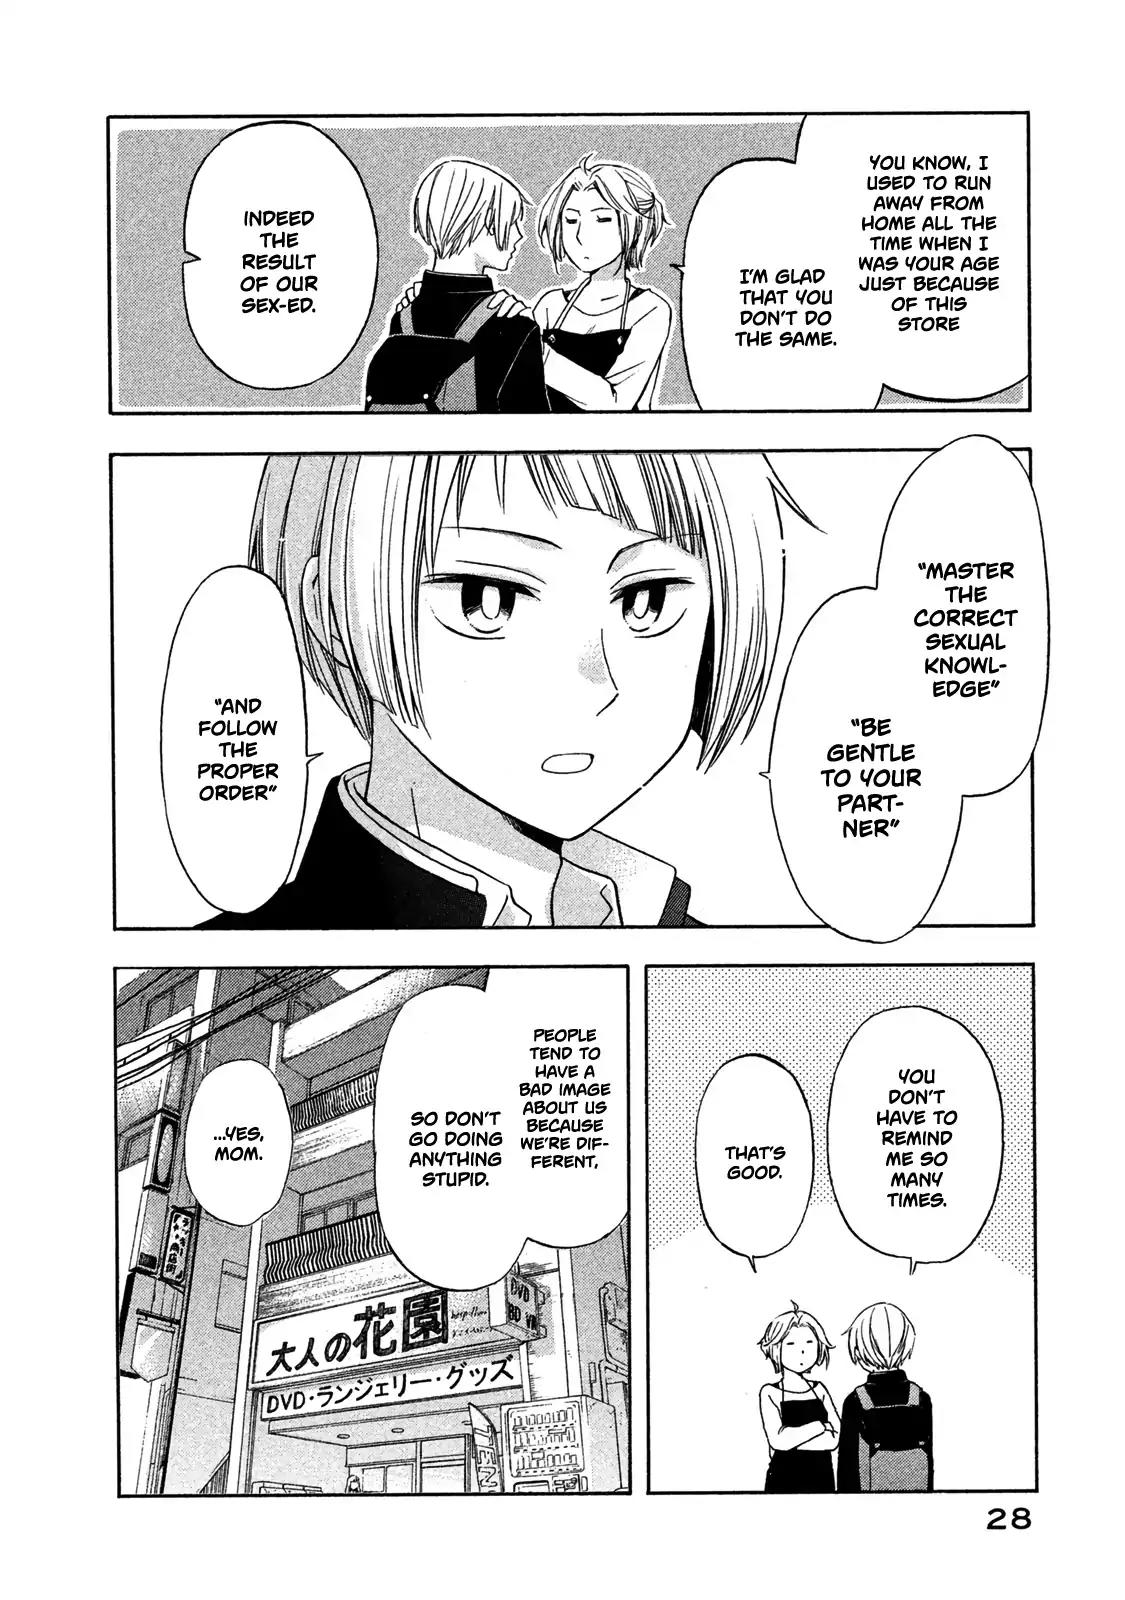 Hanazono and Kazoe's Bizarre After School Rendezvous Vol.1 Chapter 2: